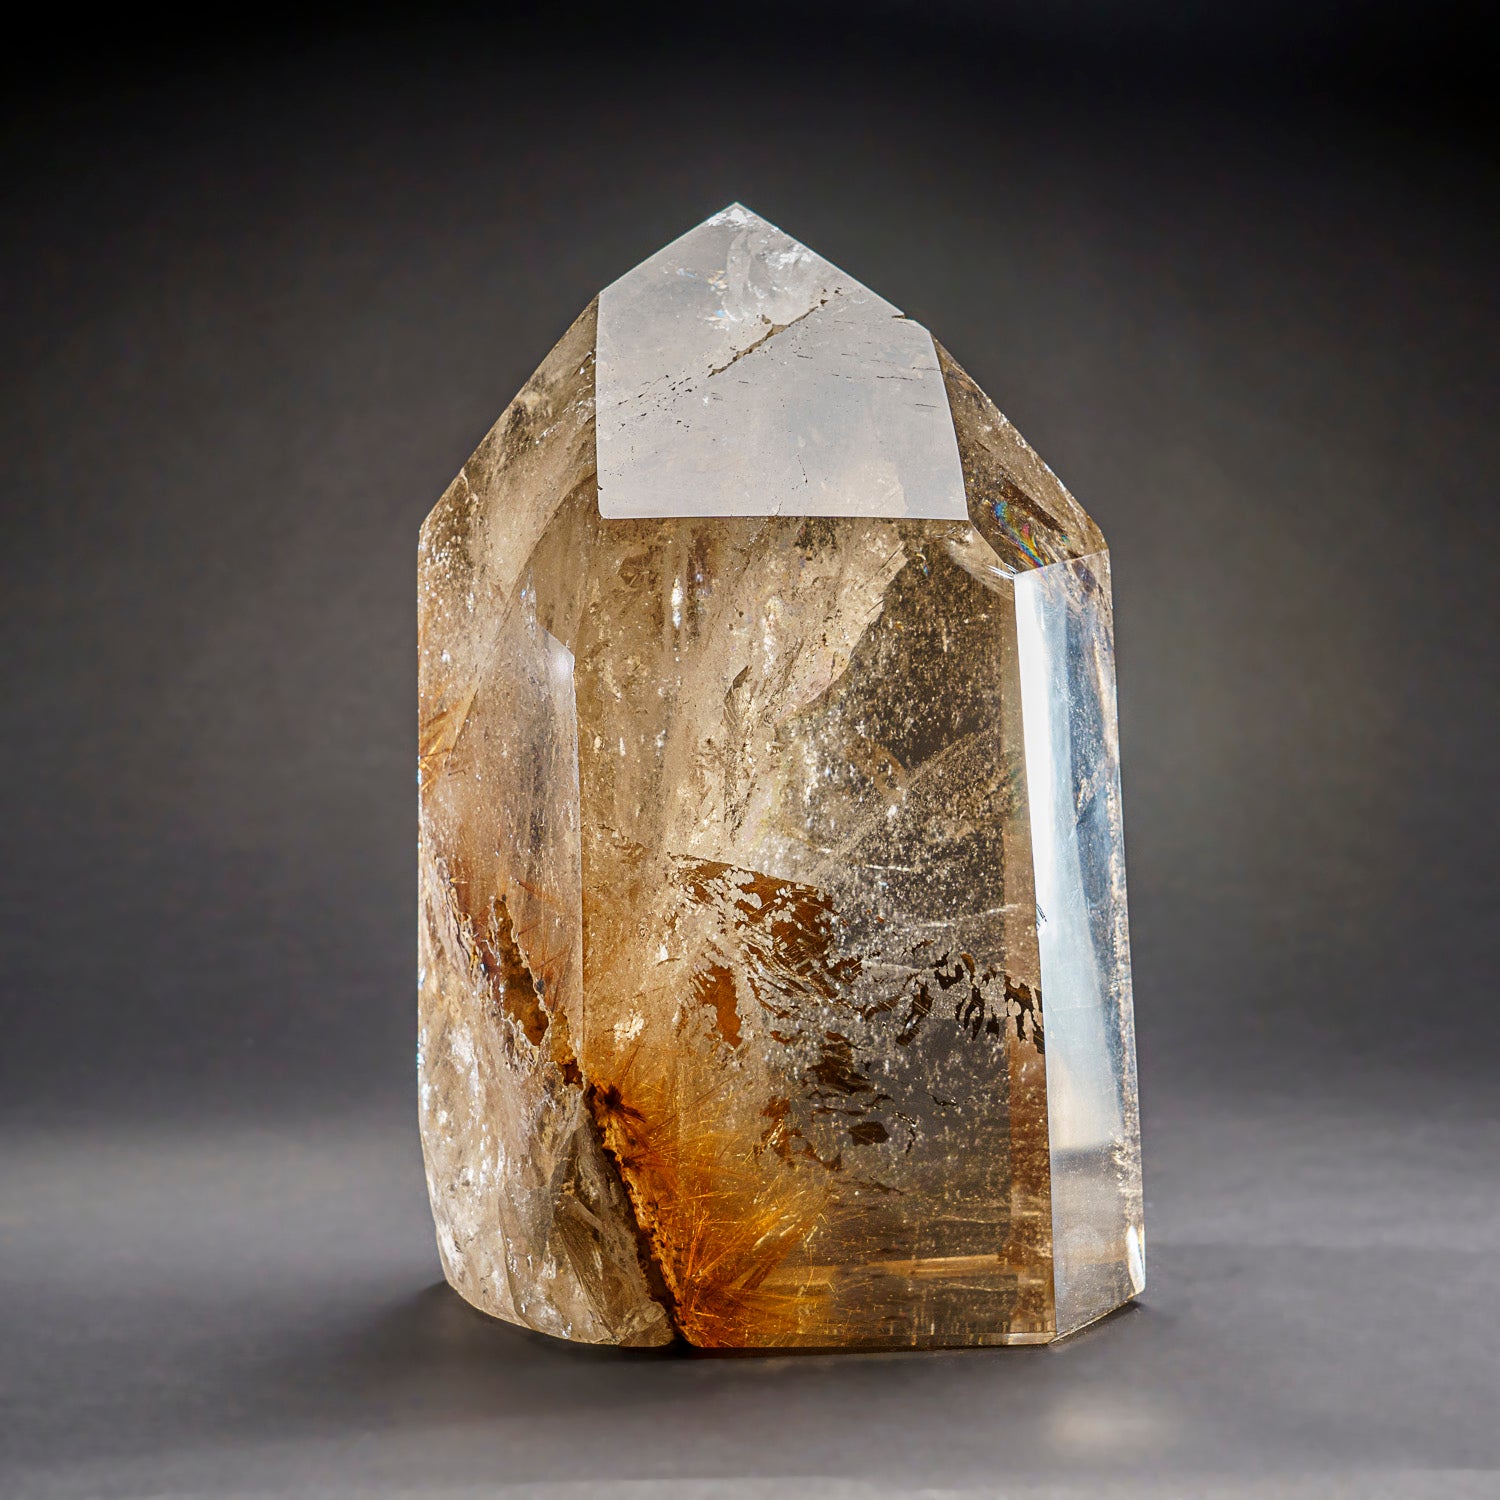 Genuine Large Smoky Quartz Crystal Point From Brazil (17.5 lbs)